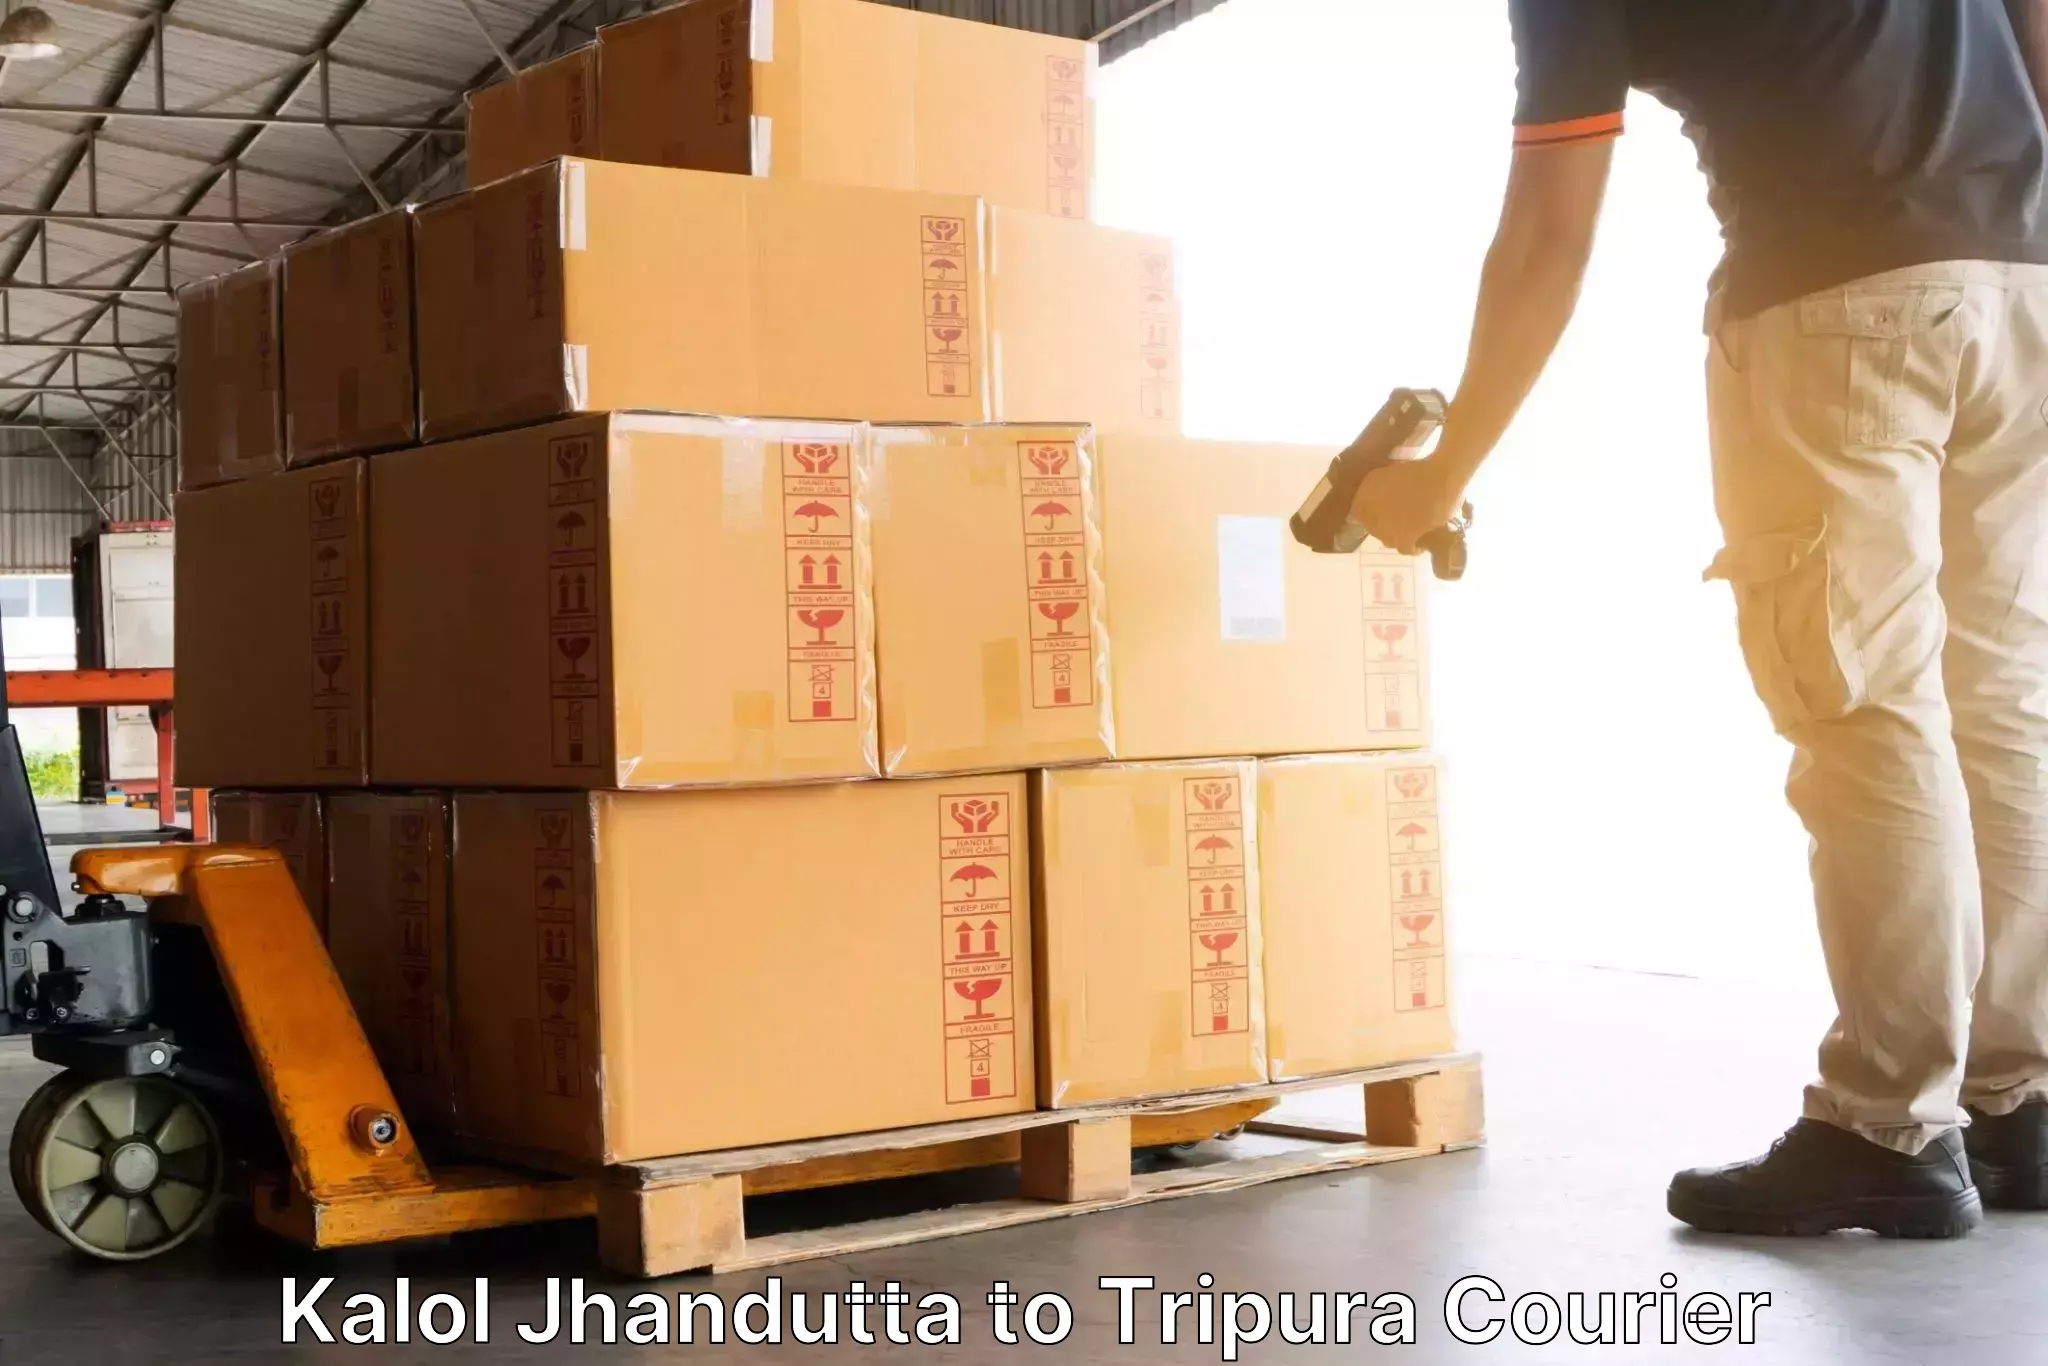 Speedy delivery service Kalol Jhandutta to Tripura